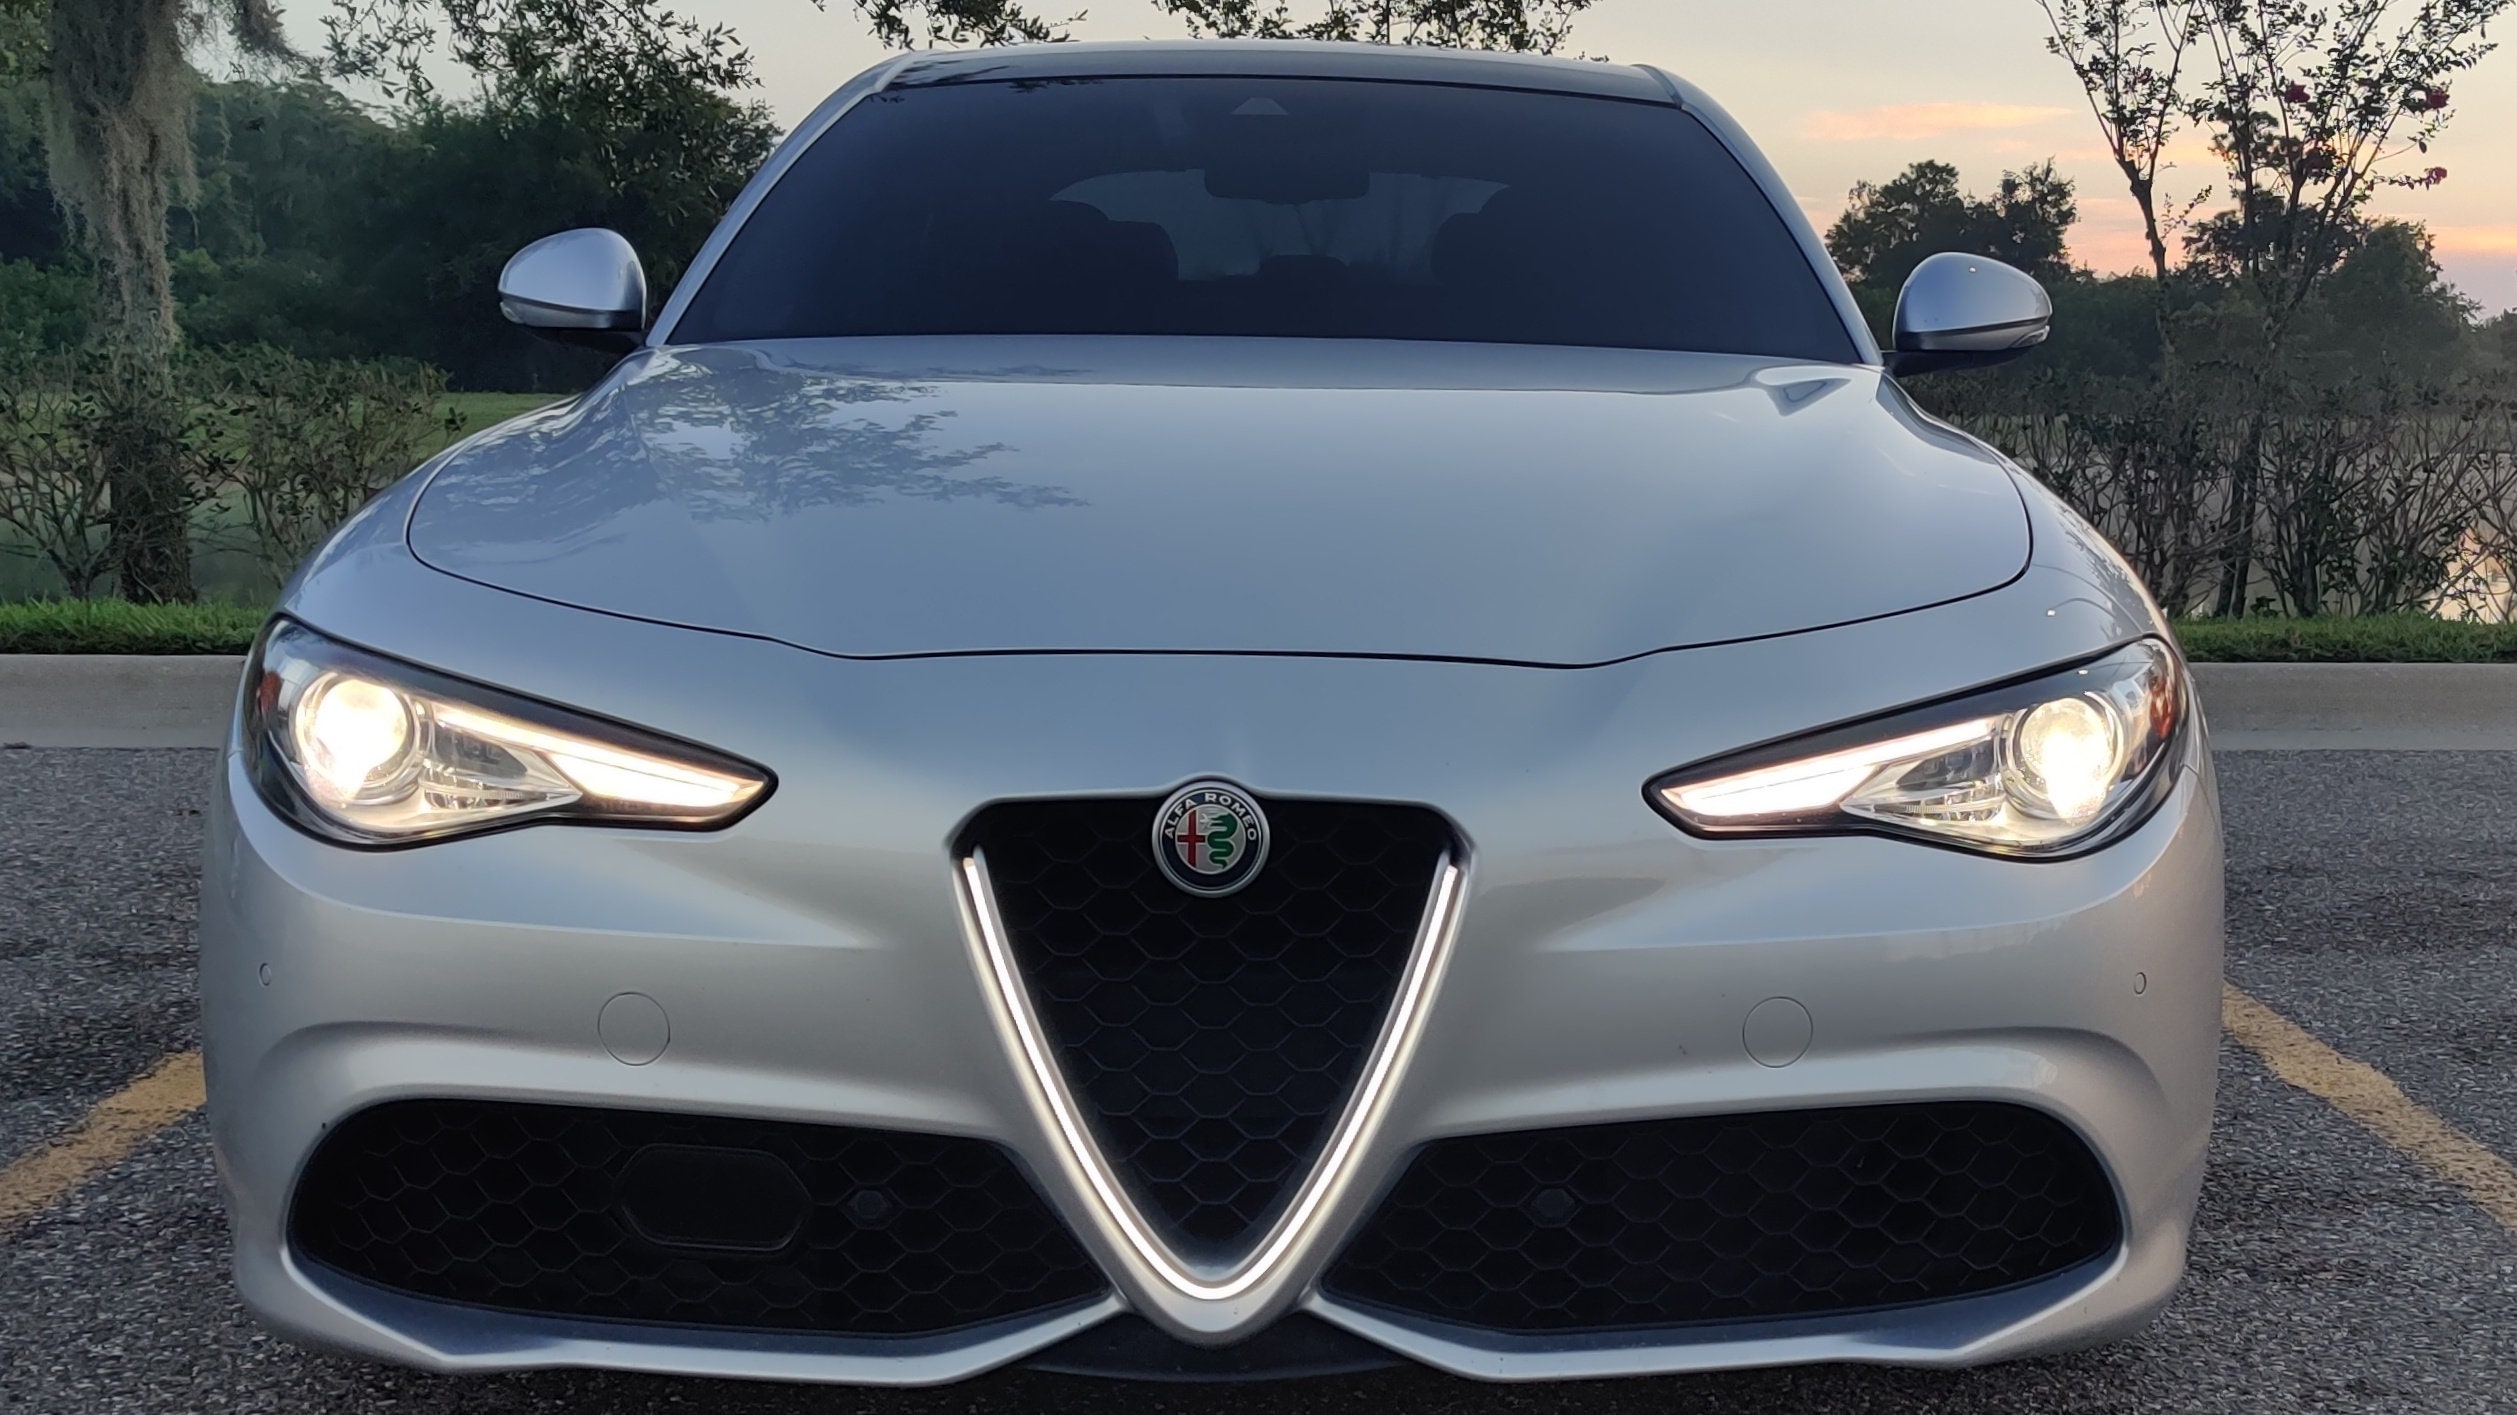 𝗕𝗲𝗮𝘂𝘁𝘆 𝗼𝗳 𝘁𝗵𝗲 𝘄𝗲𝗱𝗱𝗶𝗻𝗴! 💍😍 Alfa Romeo 147